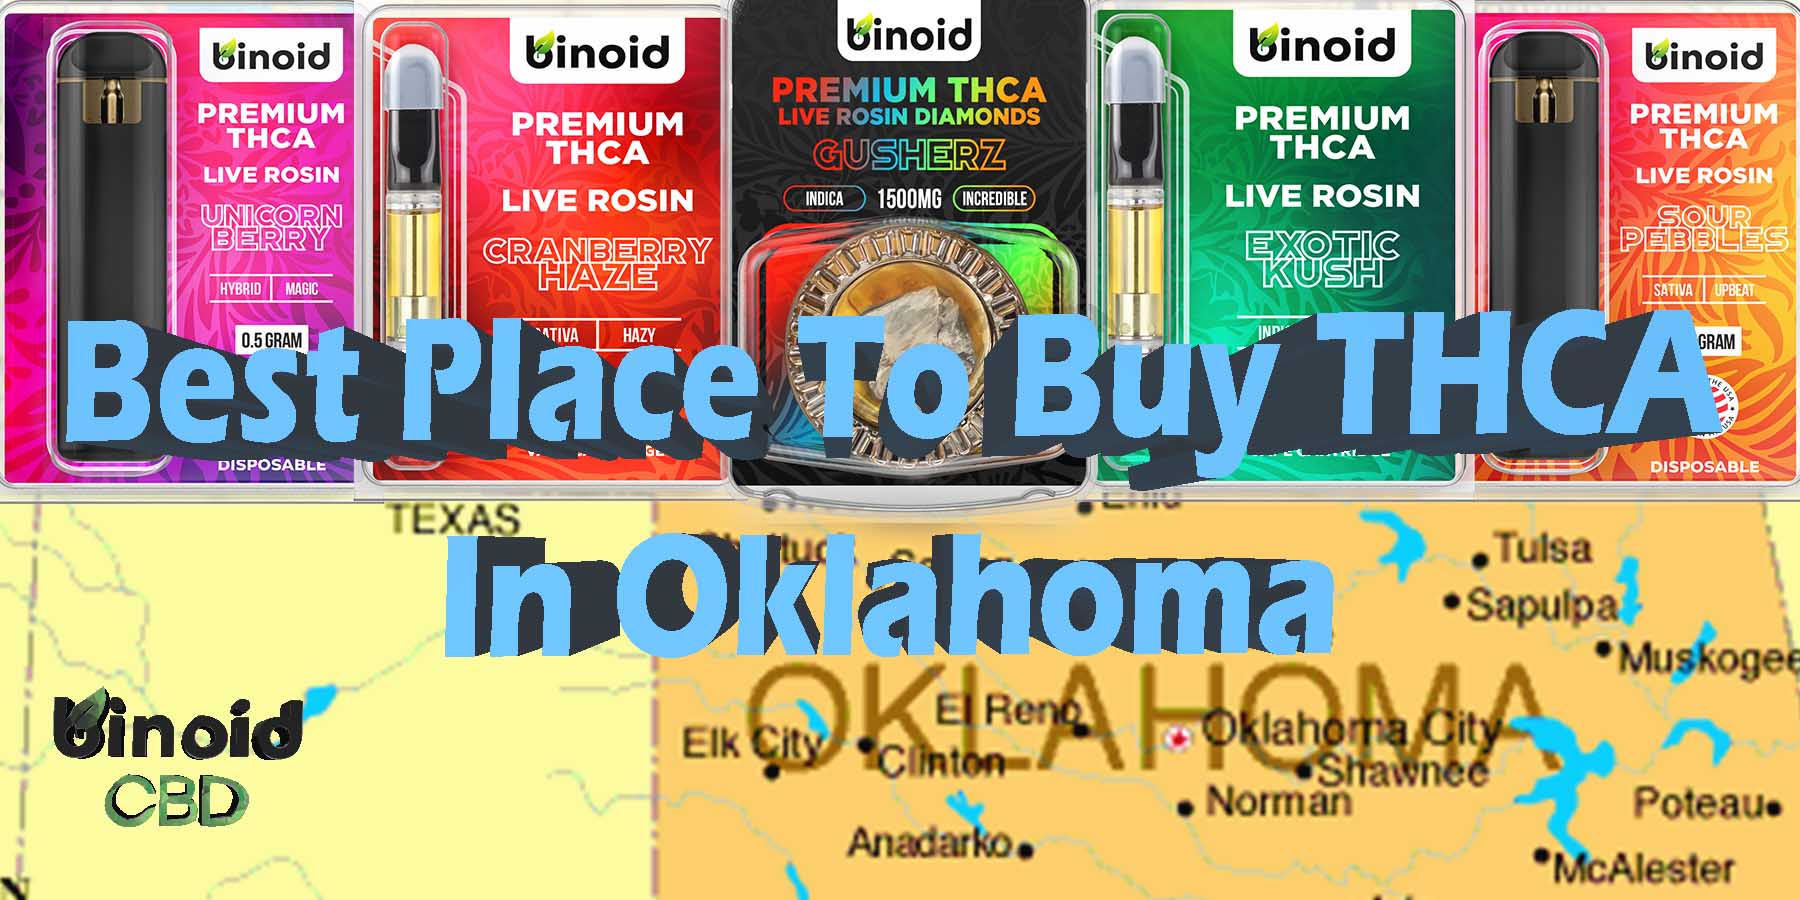 Buy THCA Oklahoma Vape Cartridges Disposables Diamonds Get Online Near Me For Sale Best Brand Strongest Real Legal Store Shop Reddit